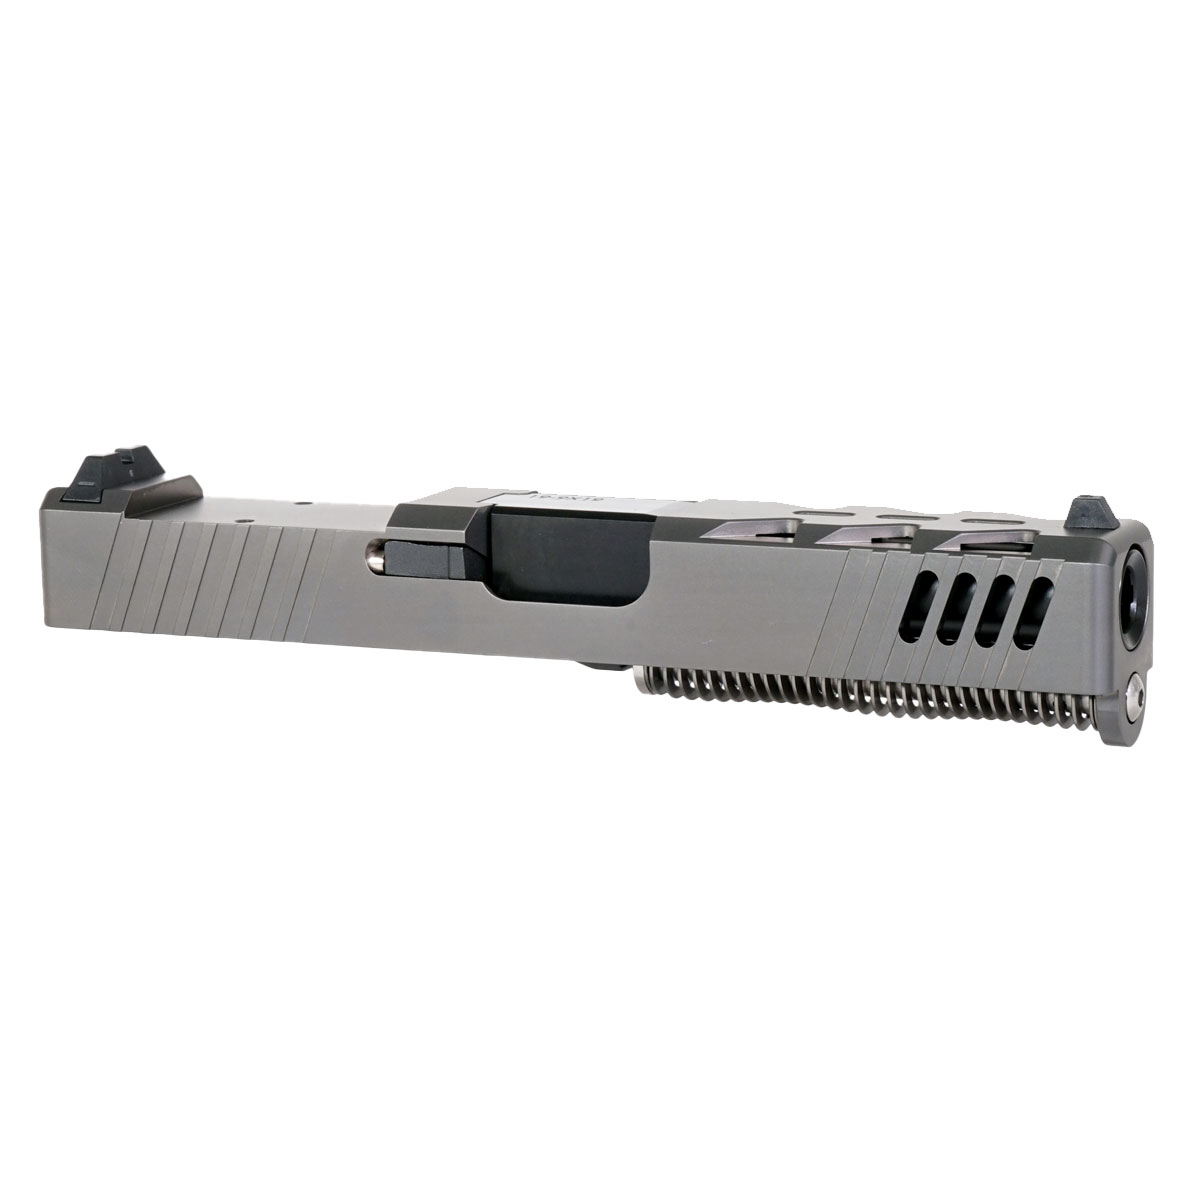 MMC 'The Rock' 9mm Complete Slide Kit - Glock 19 Gen 1-3 Compatible